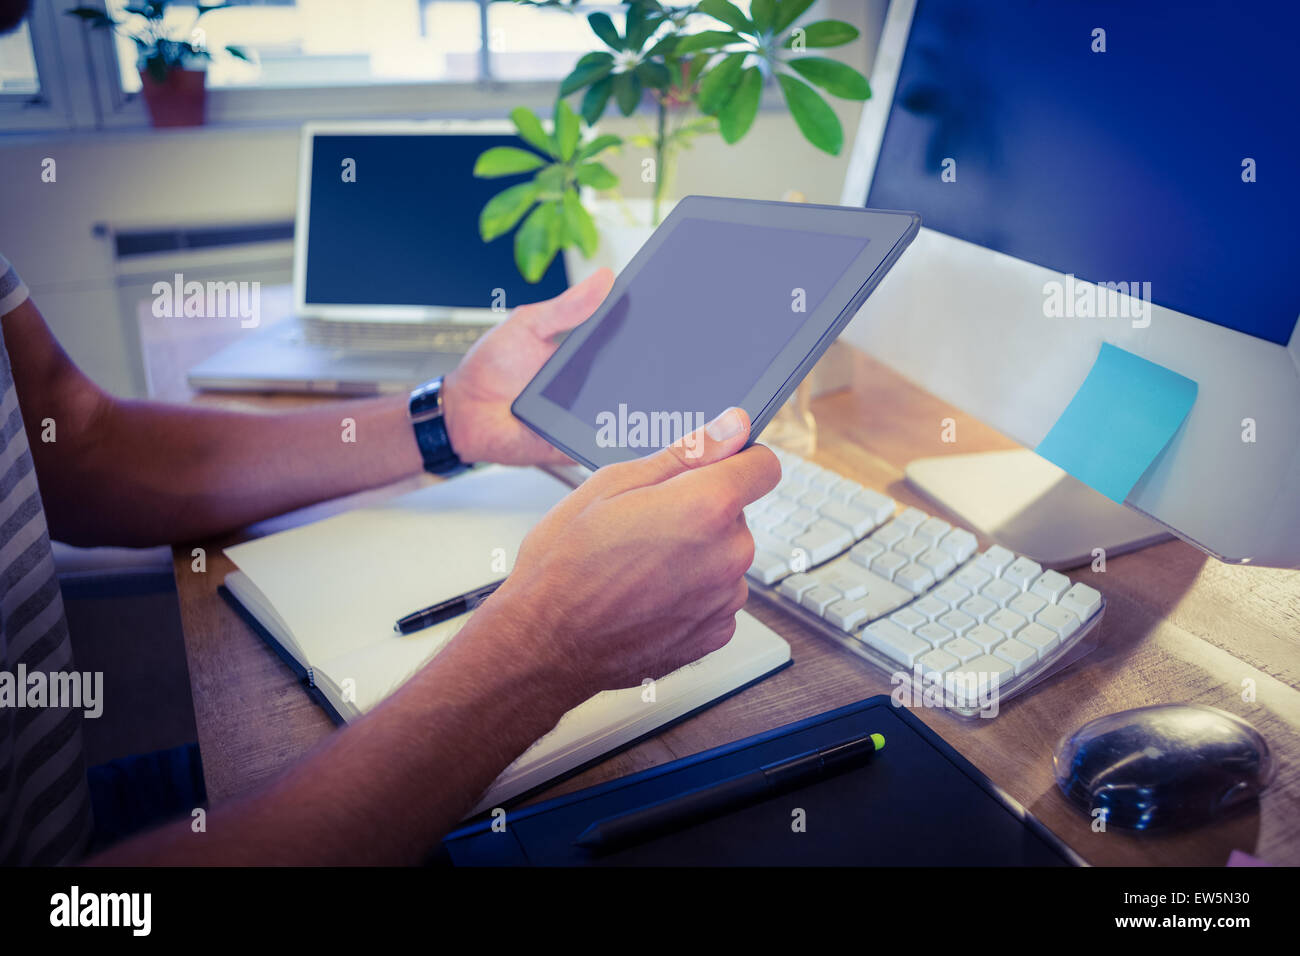 Designer working at desk using tablet Stock Photo